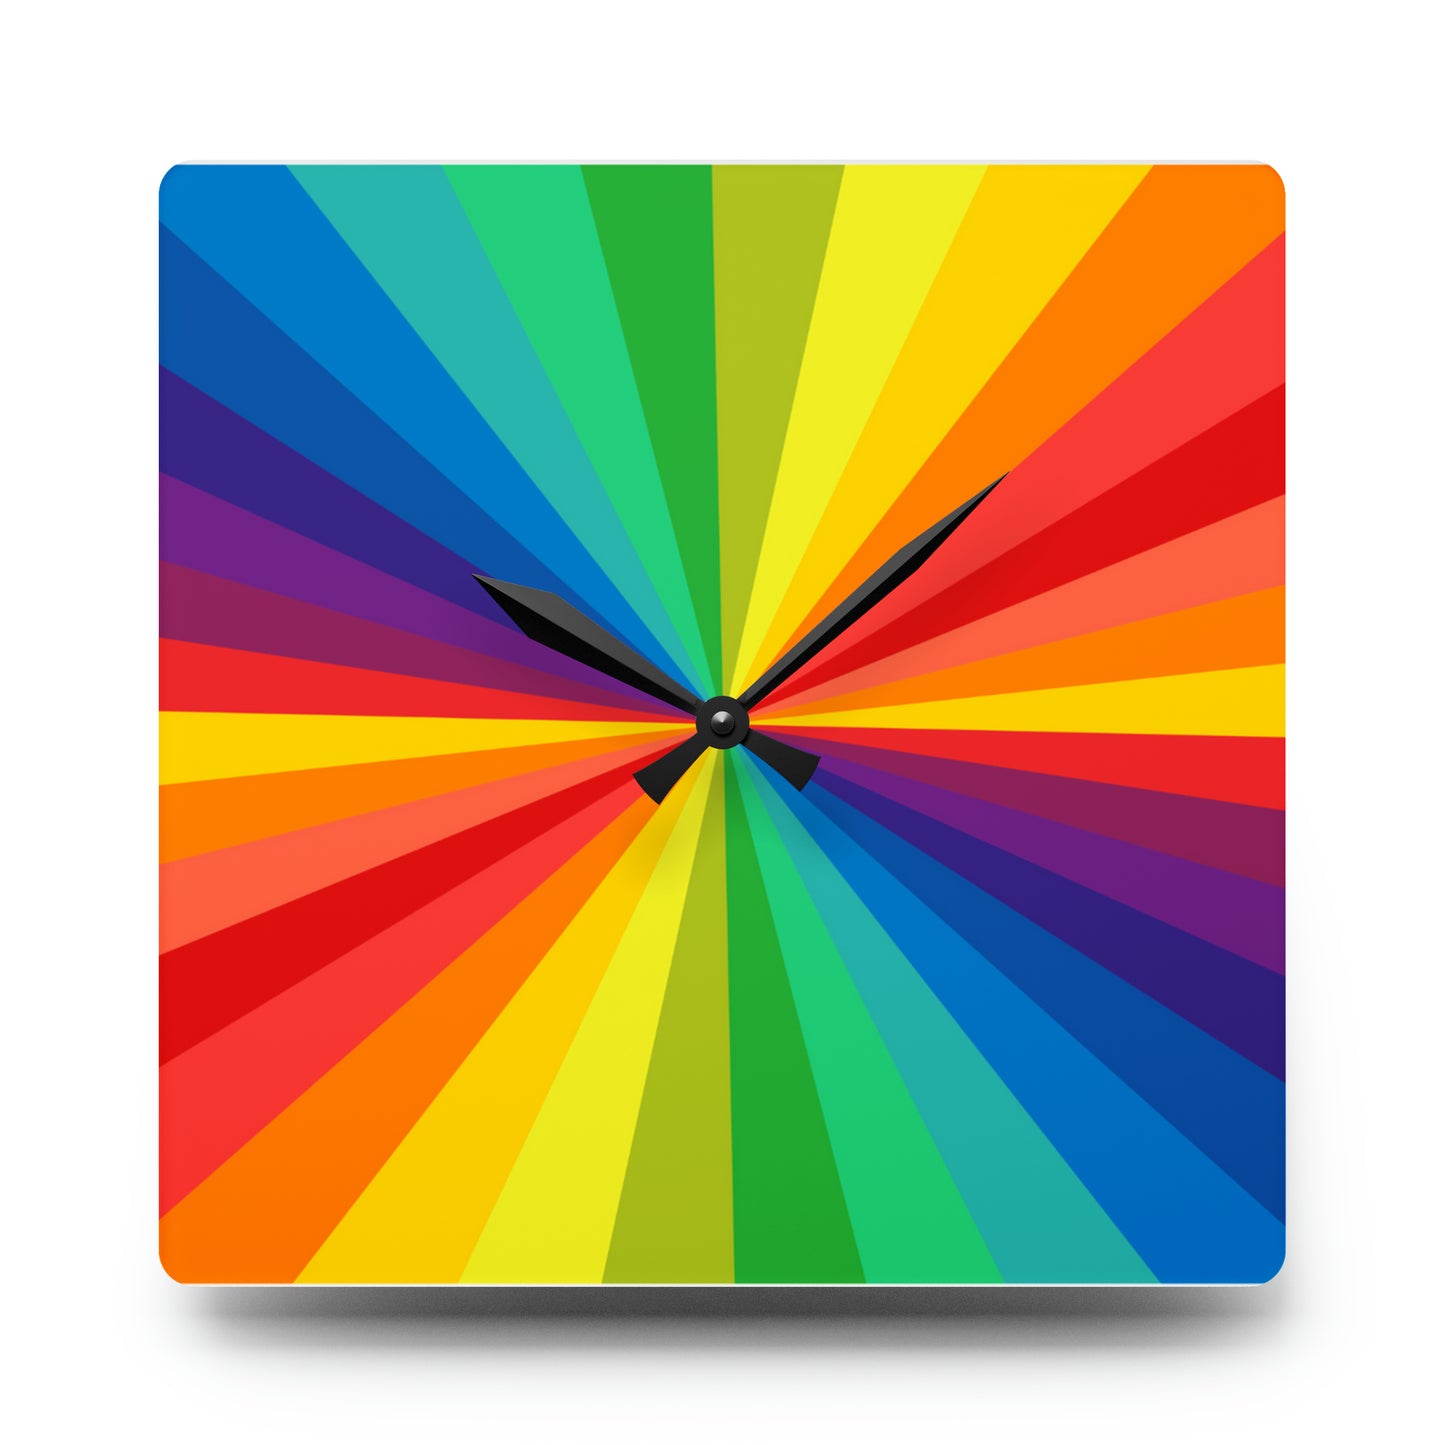 Rainbow Stripes Acrylic Wall Clock